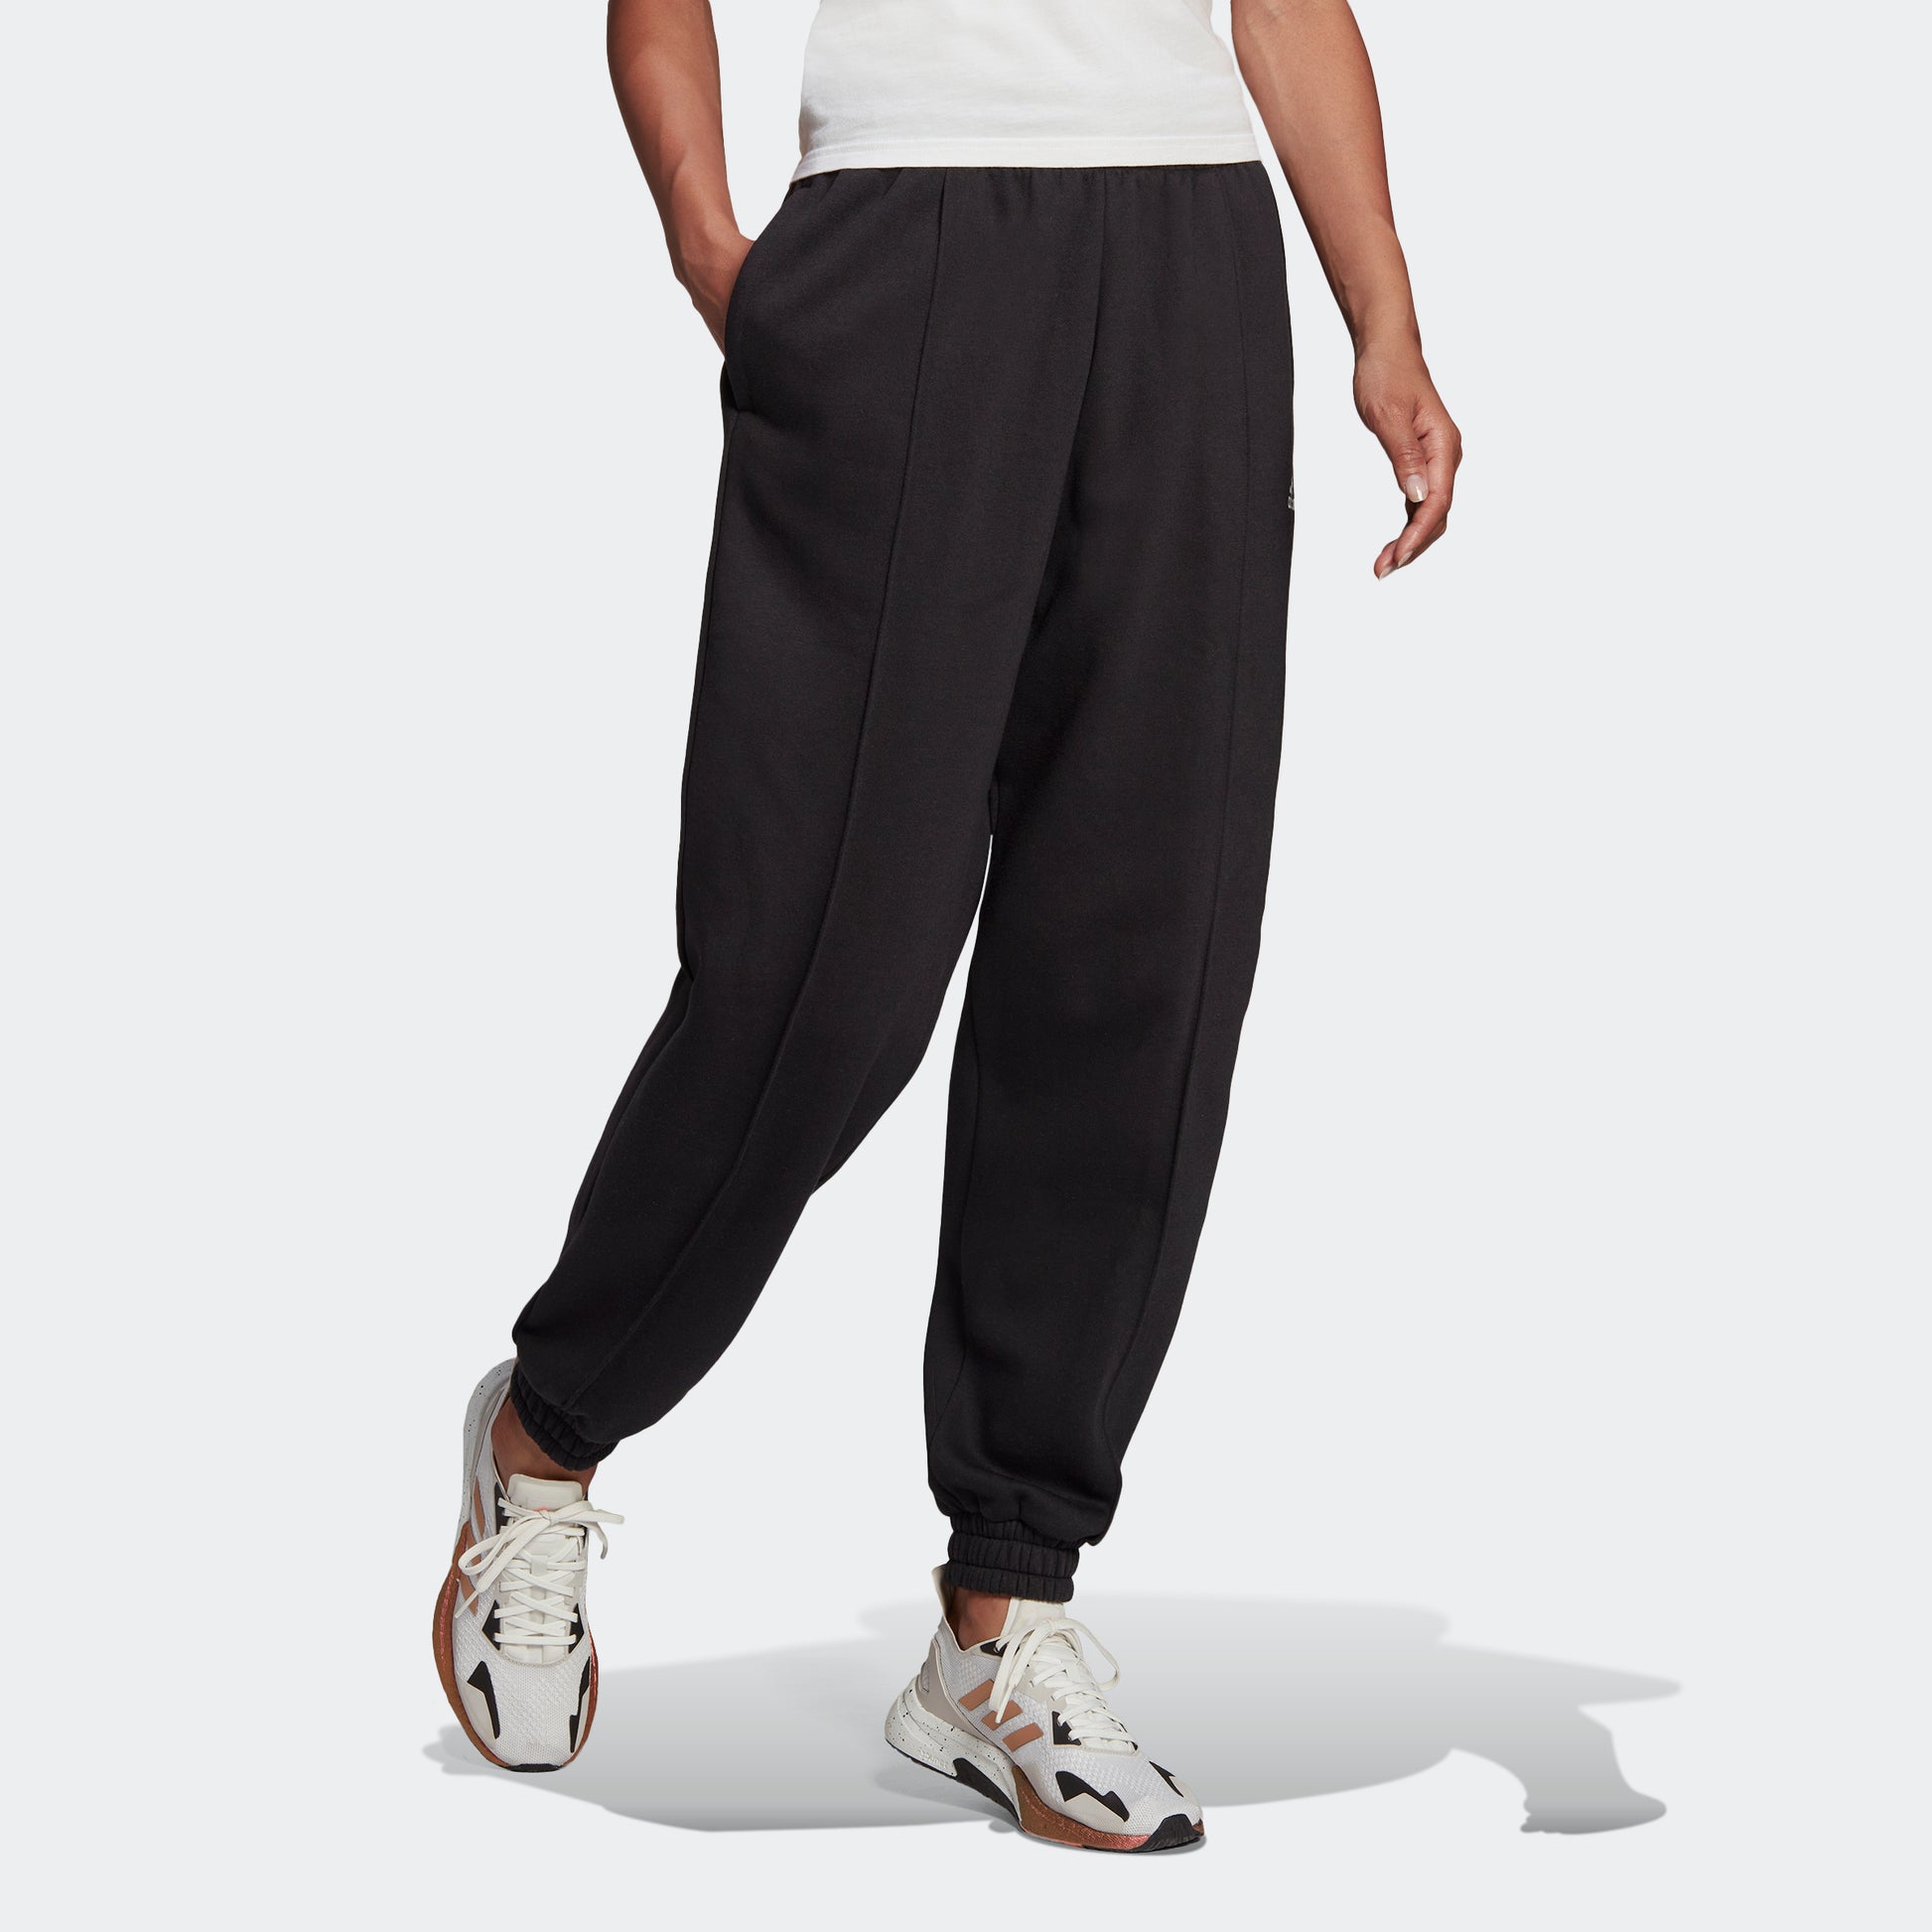 Adidas Essentials Studio Lounge Cuffed 3-S 7/8 Pant